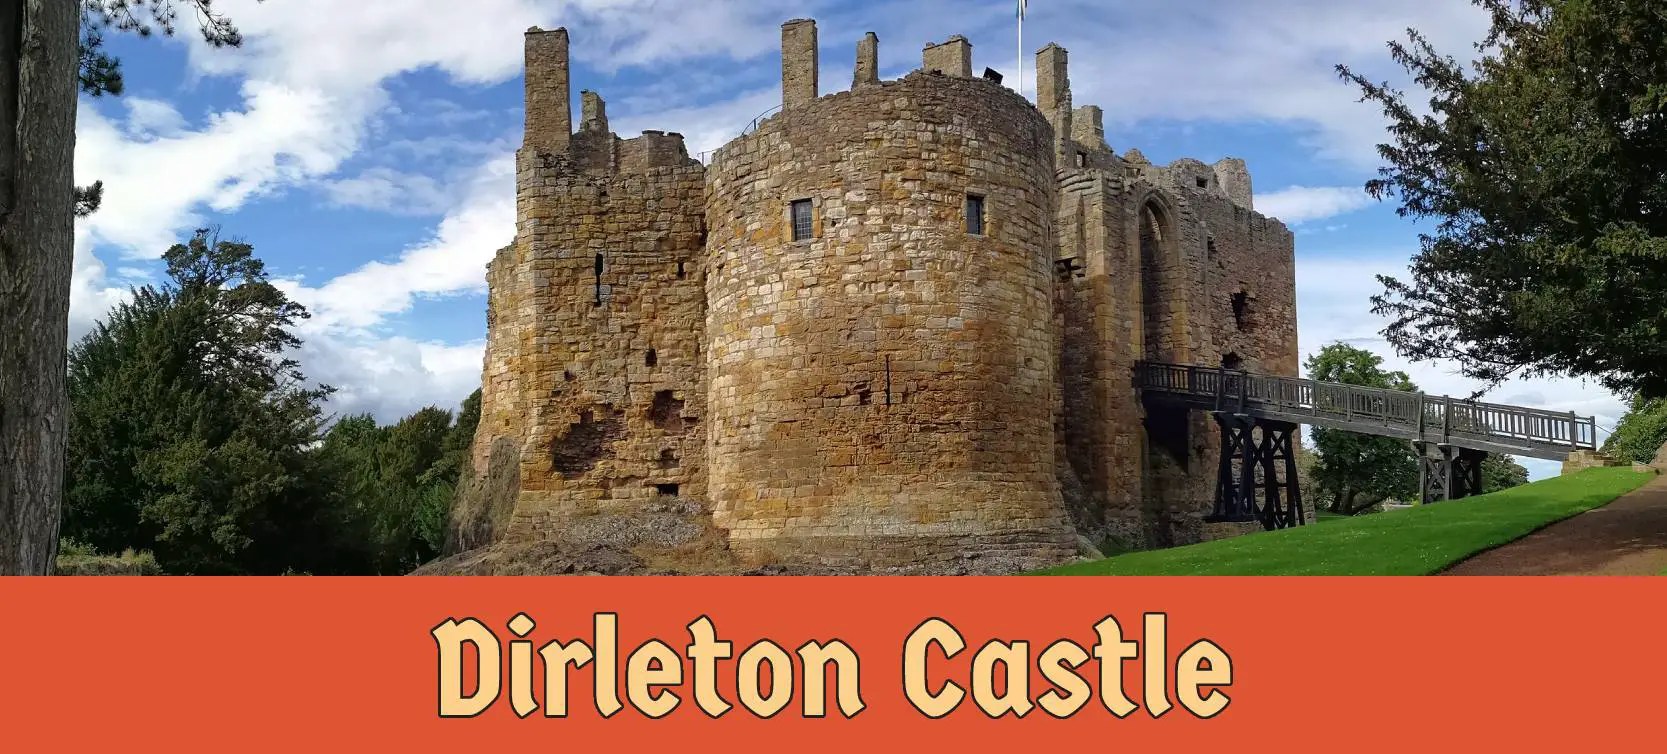 Dirleton Castle Wallpapers